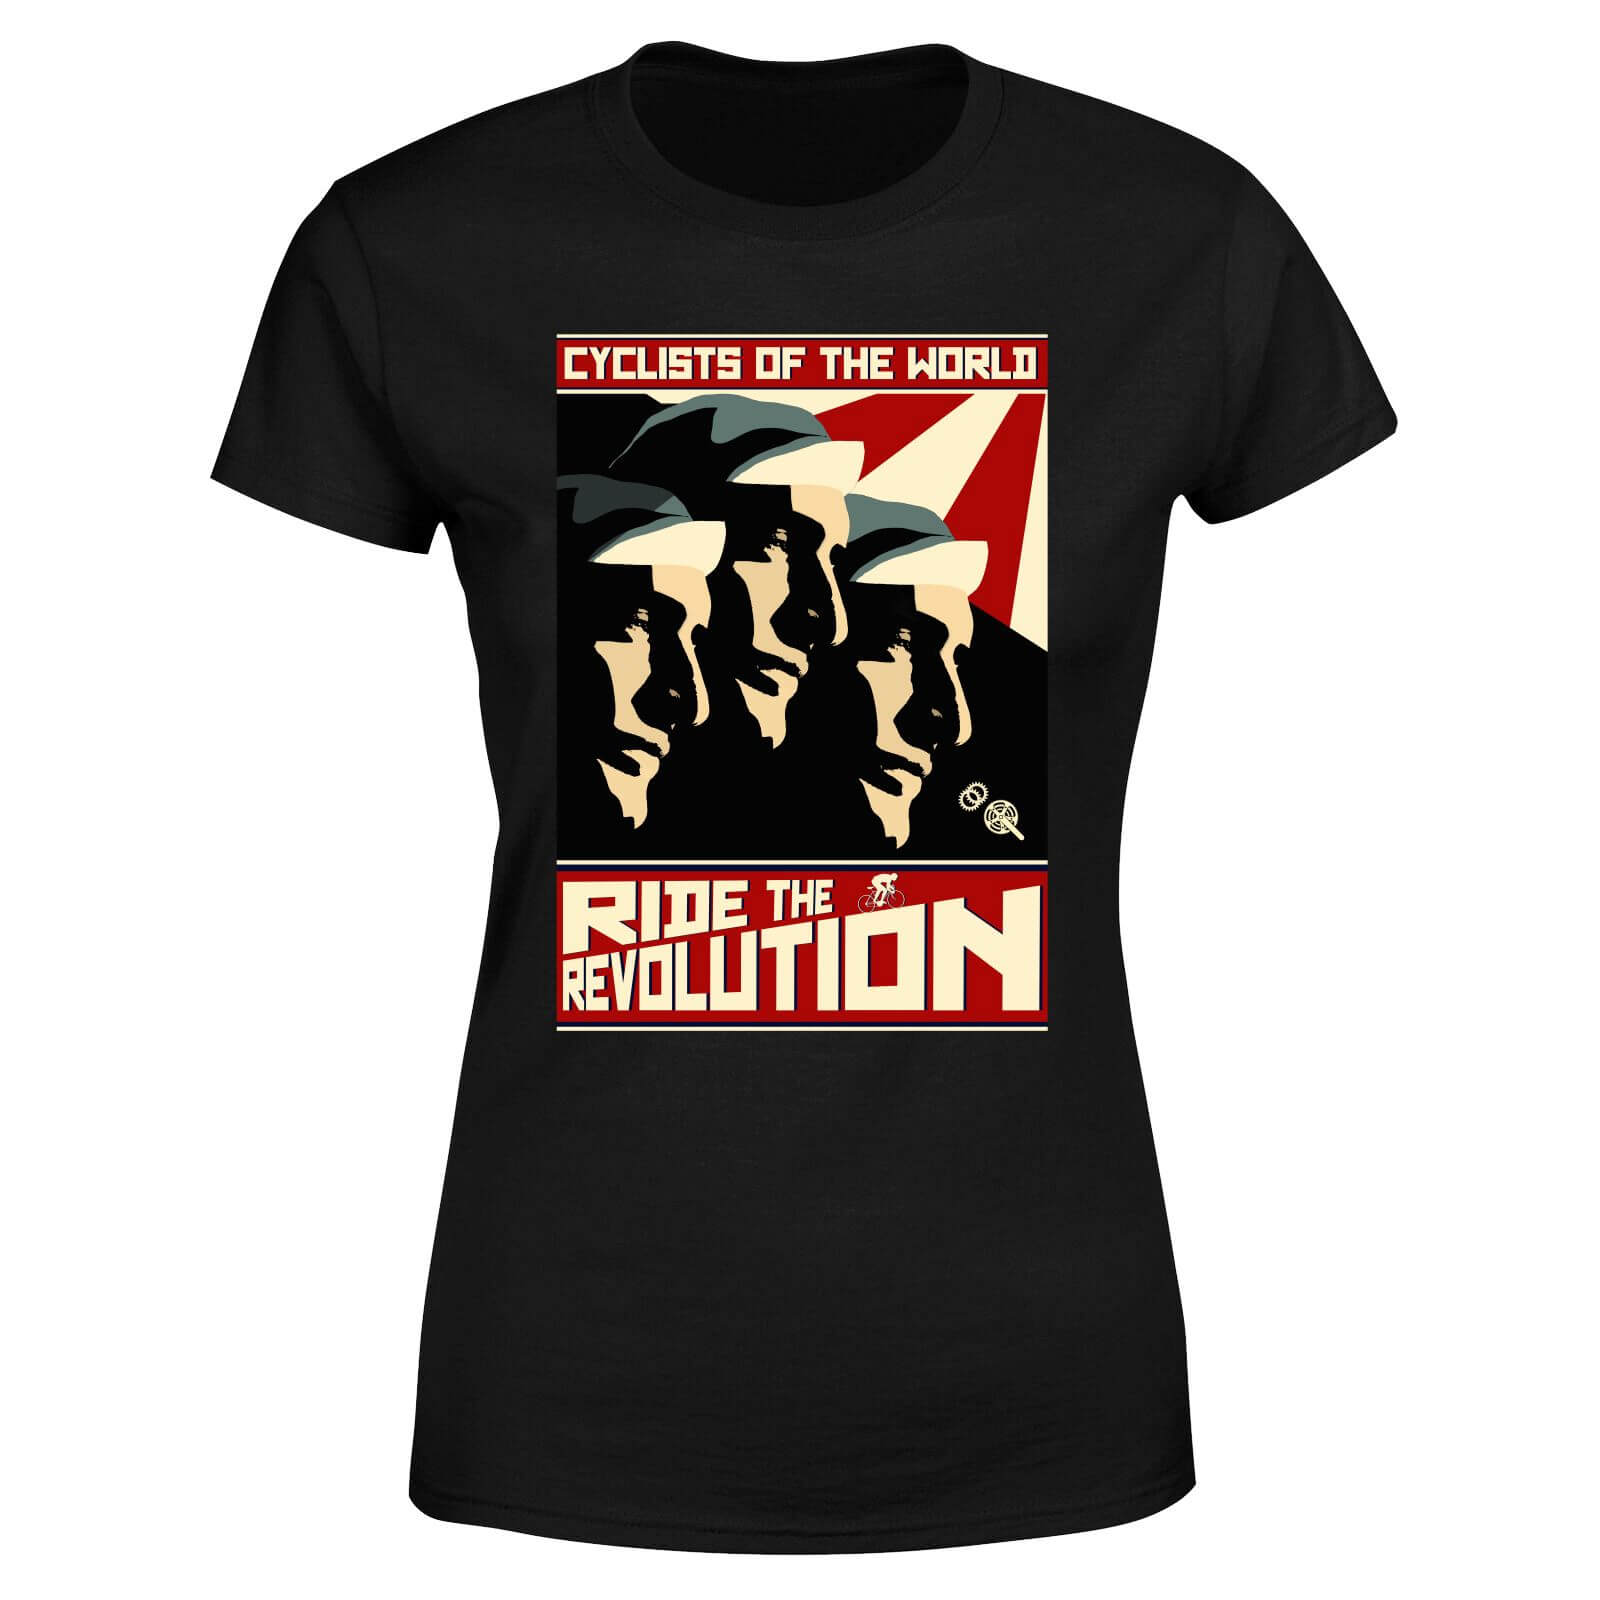 Revolution Women's T-Shirt - Black - L - Black